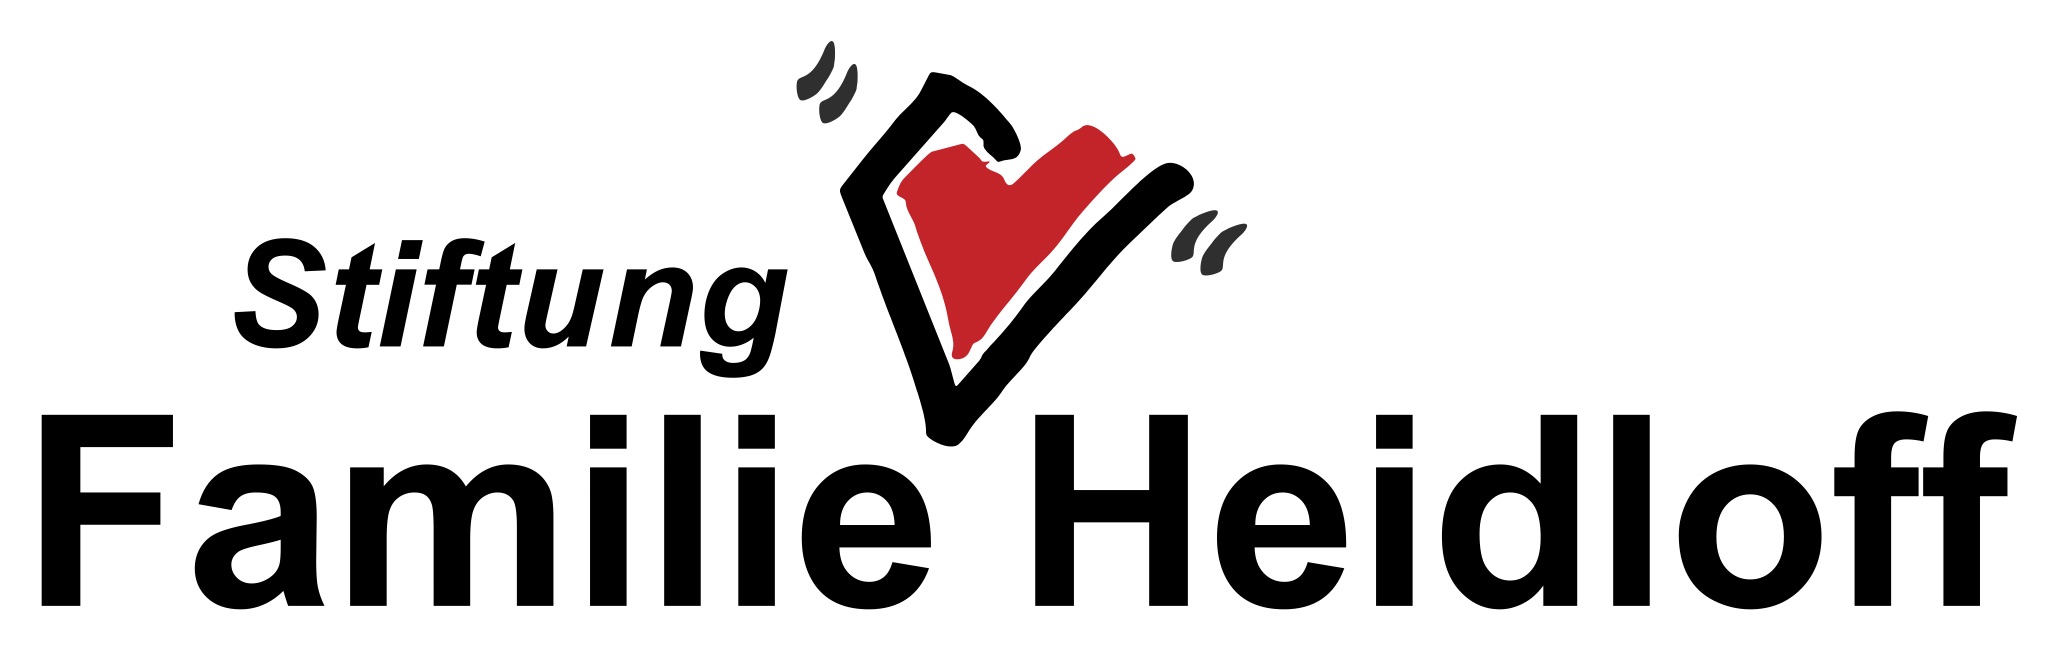 StiftungFamilieHeidloff_Logo